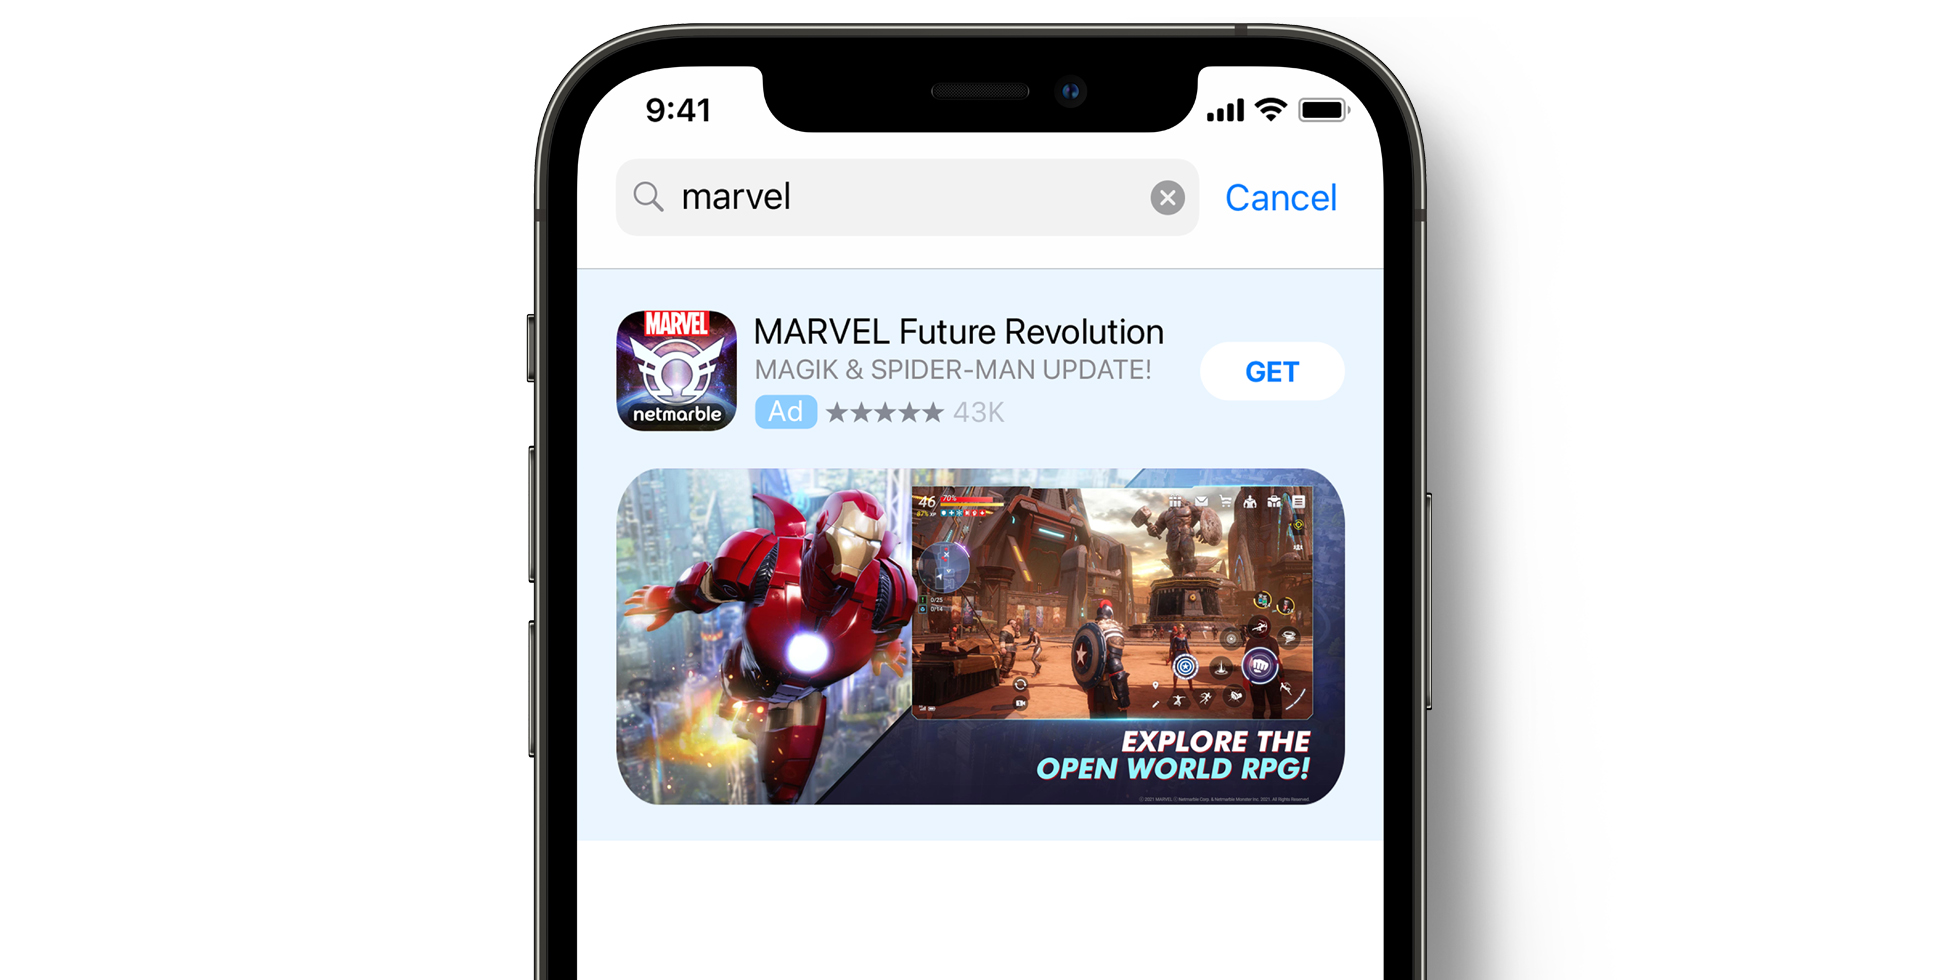 MARVEL Future Revolution ad on the App Store 